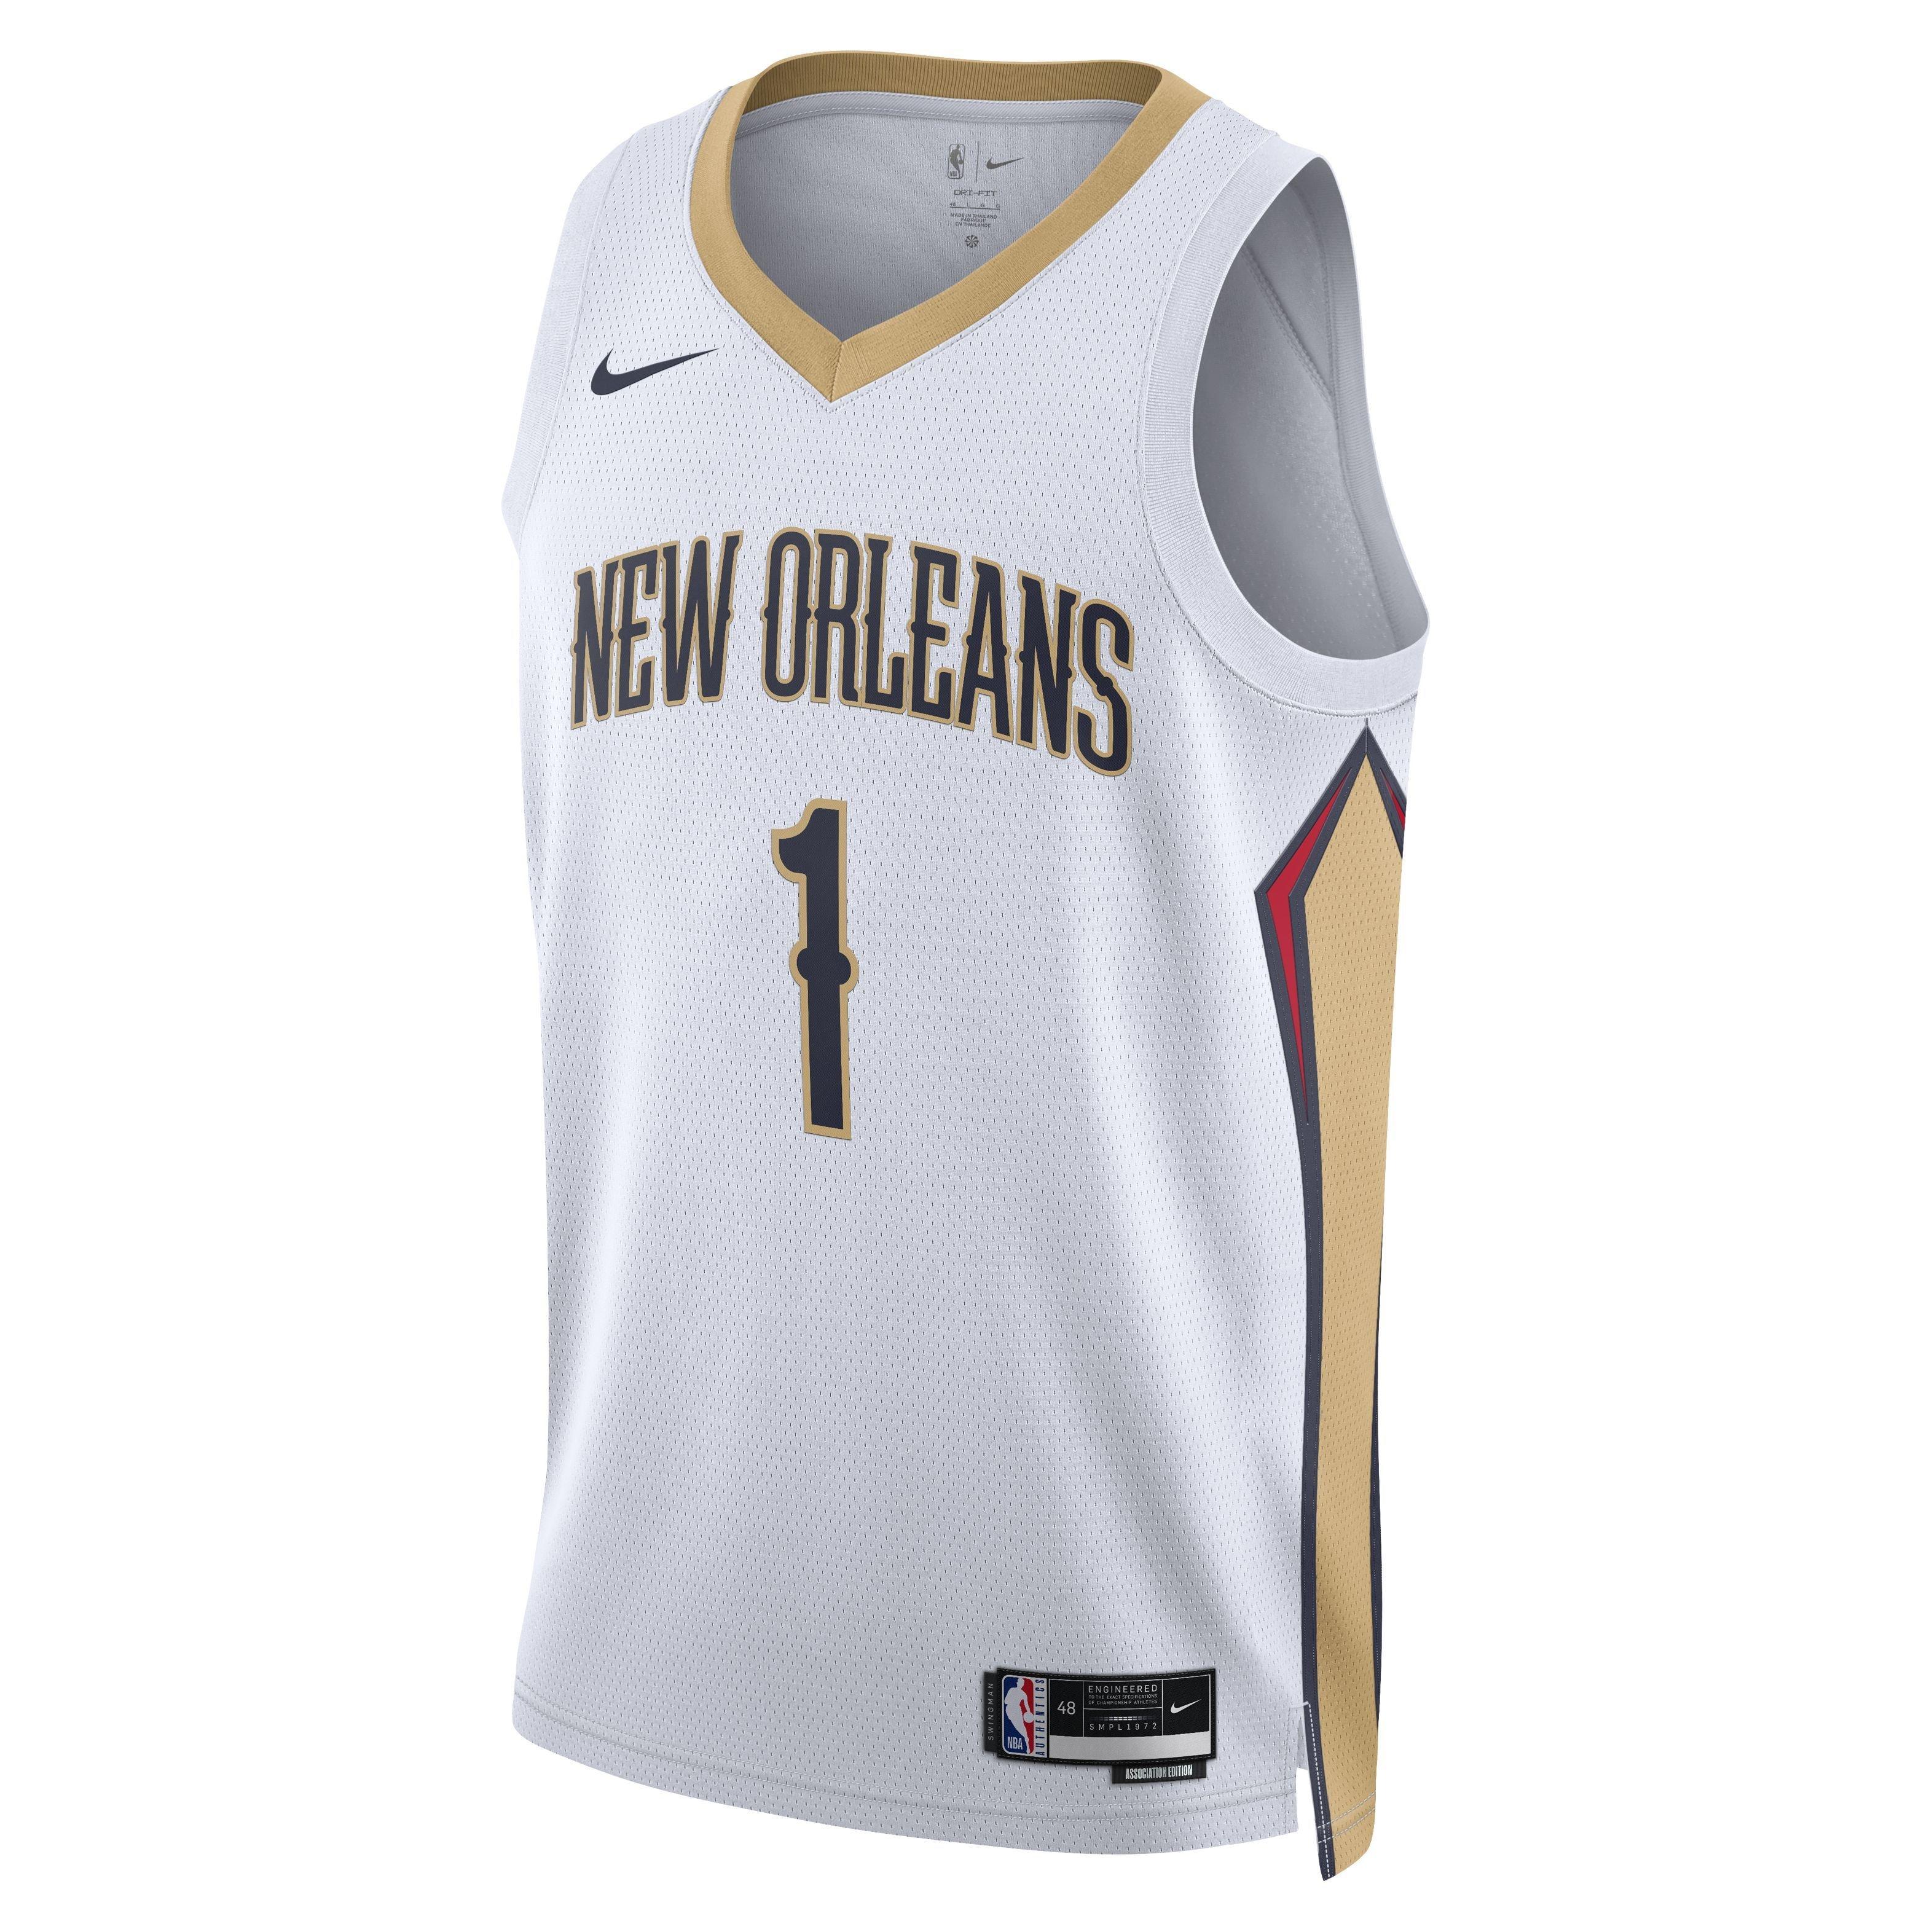 New Orleans Pelicans Men's Nike NBA Mesh Shorts.